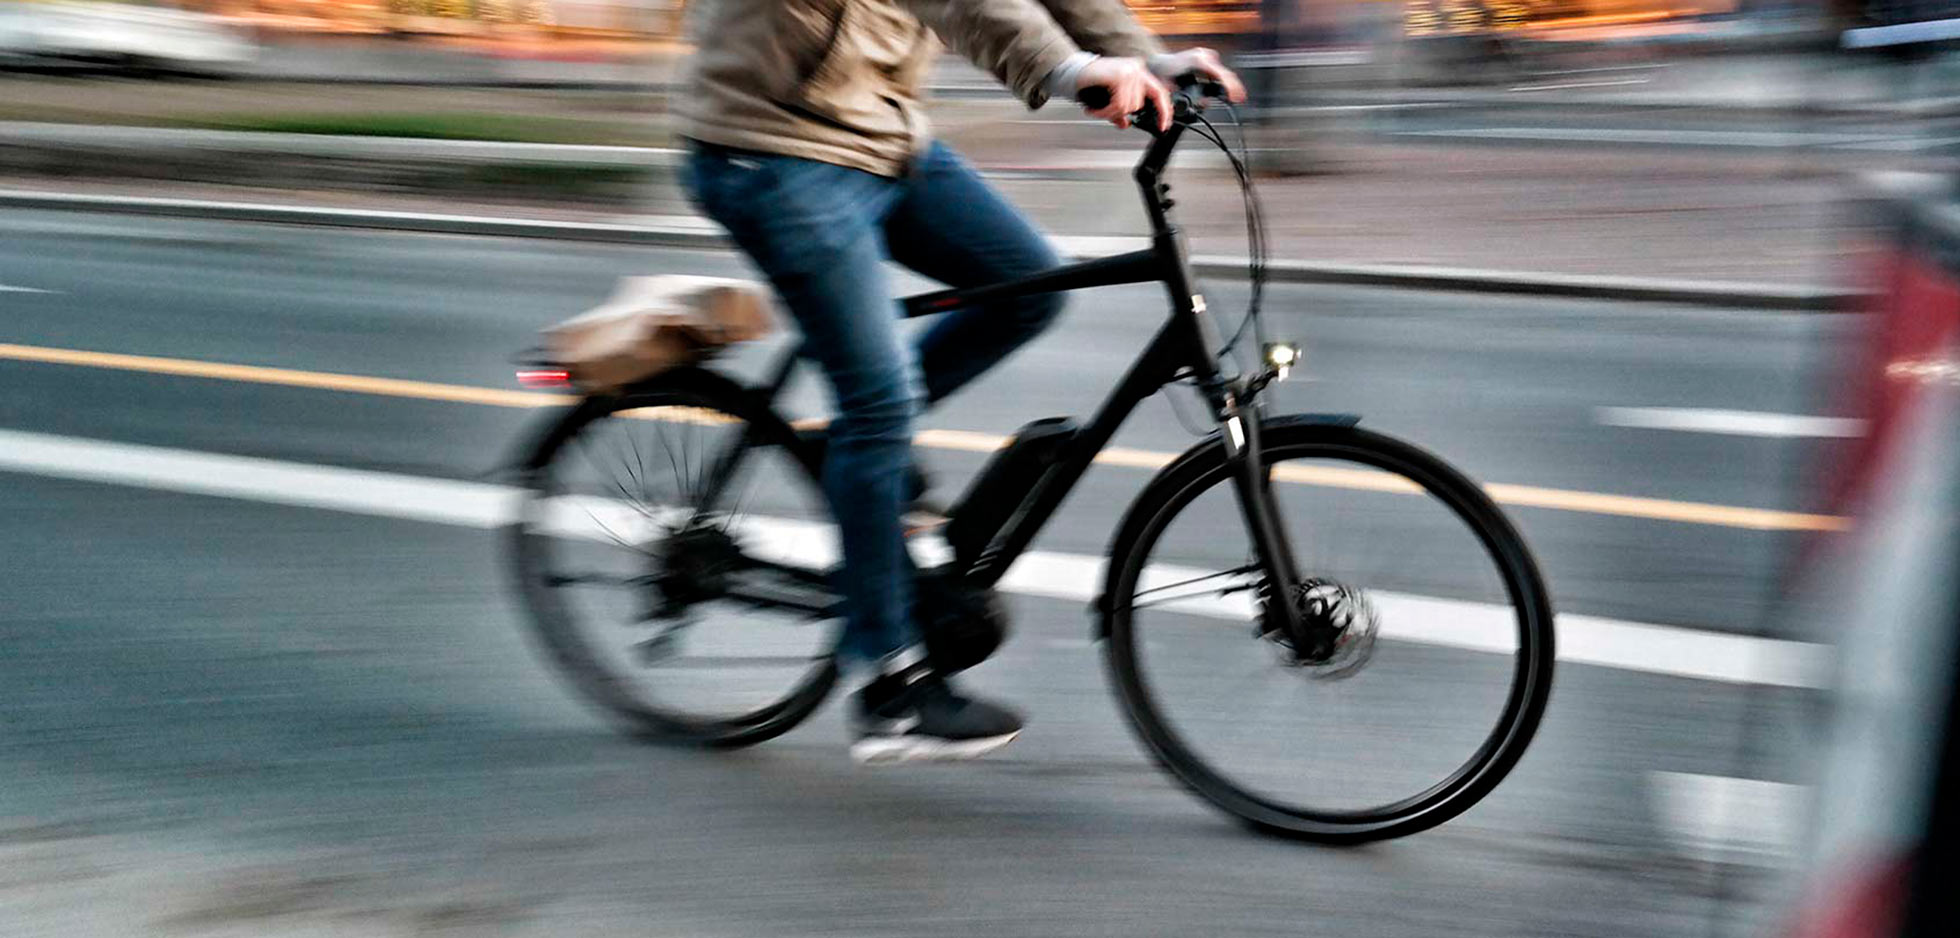 E-bikes are transforming urban transportation